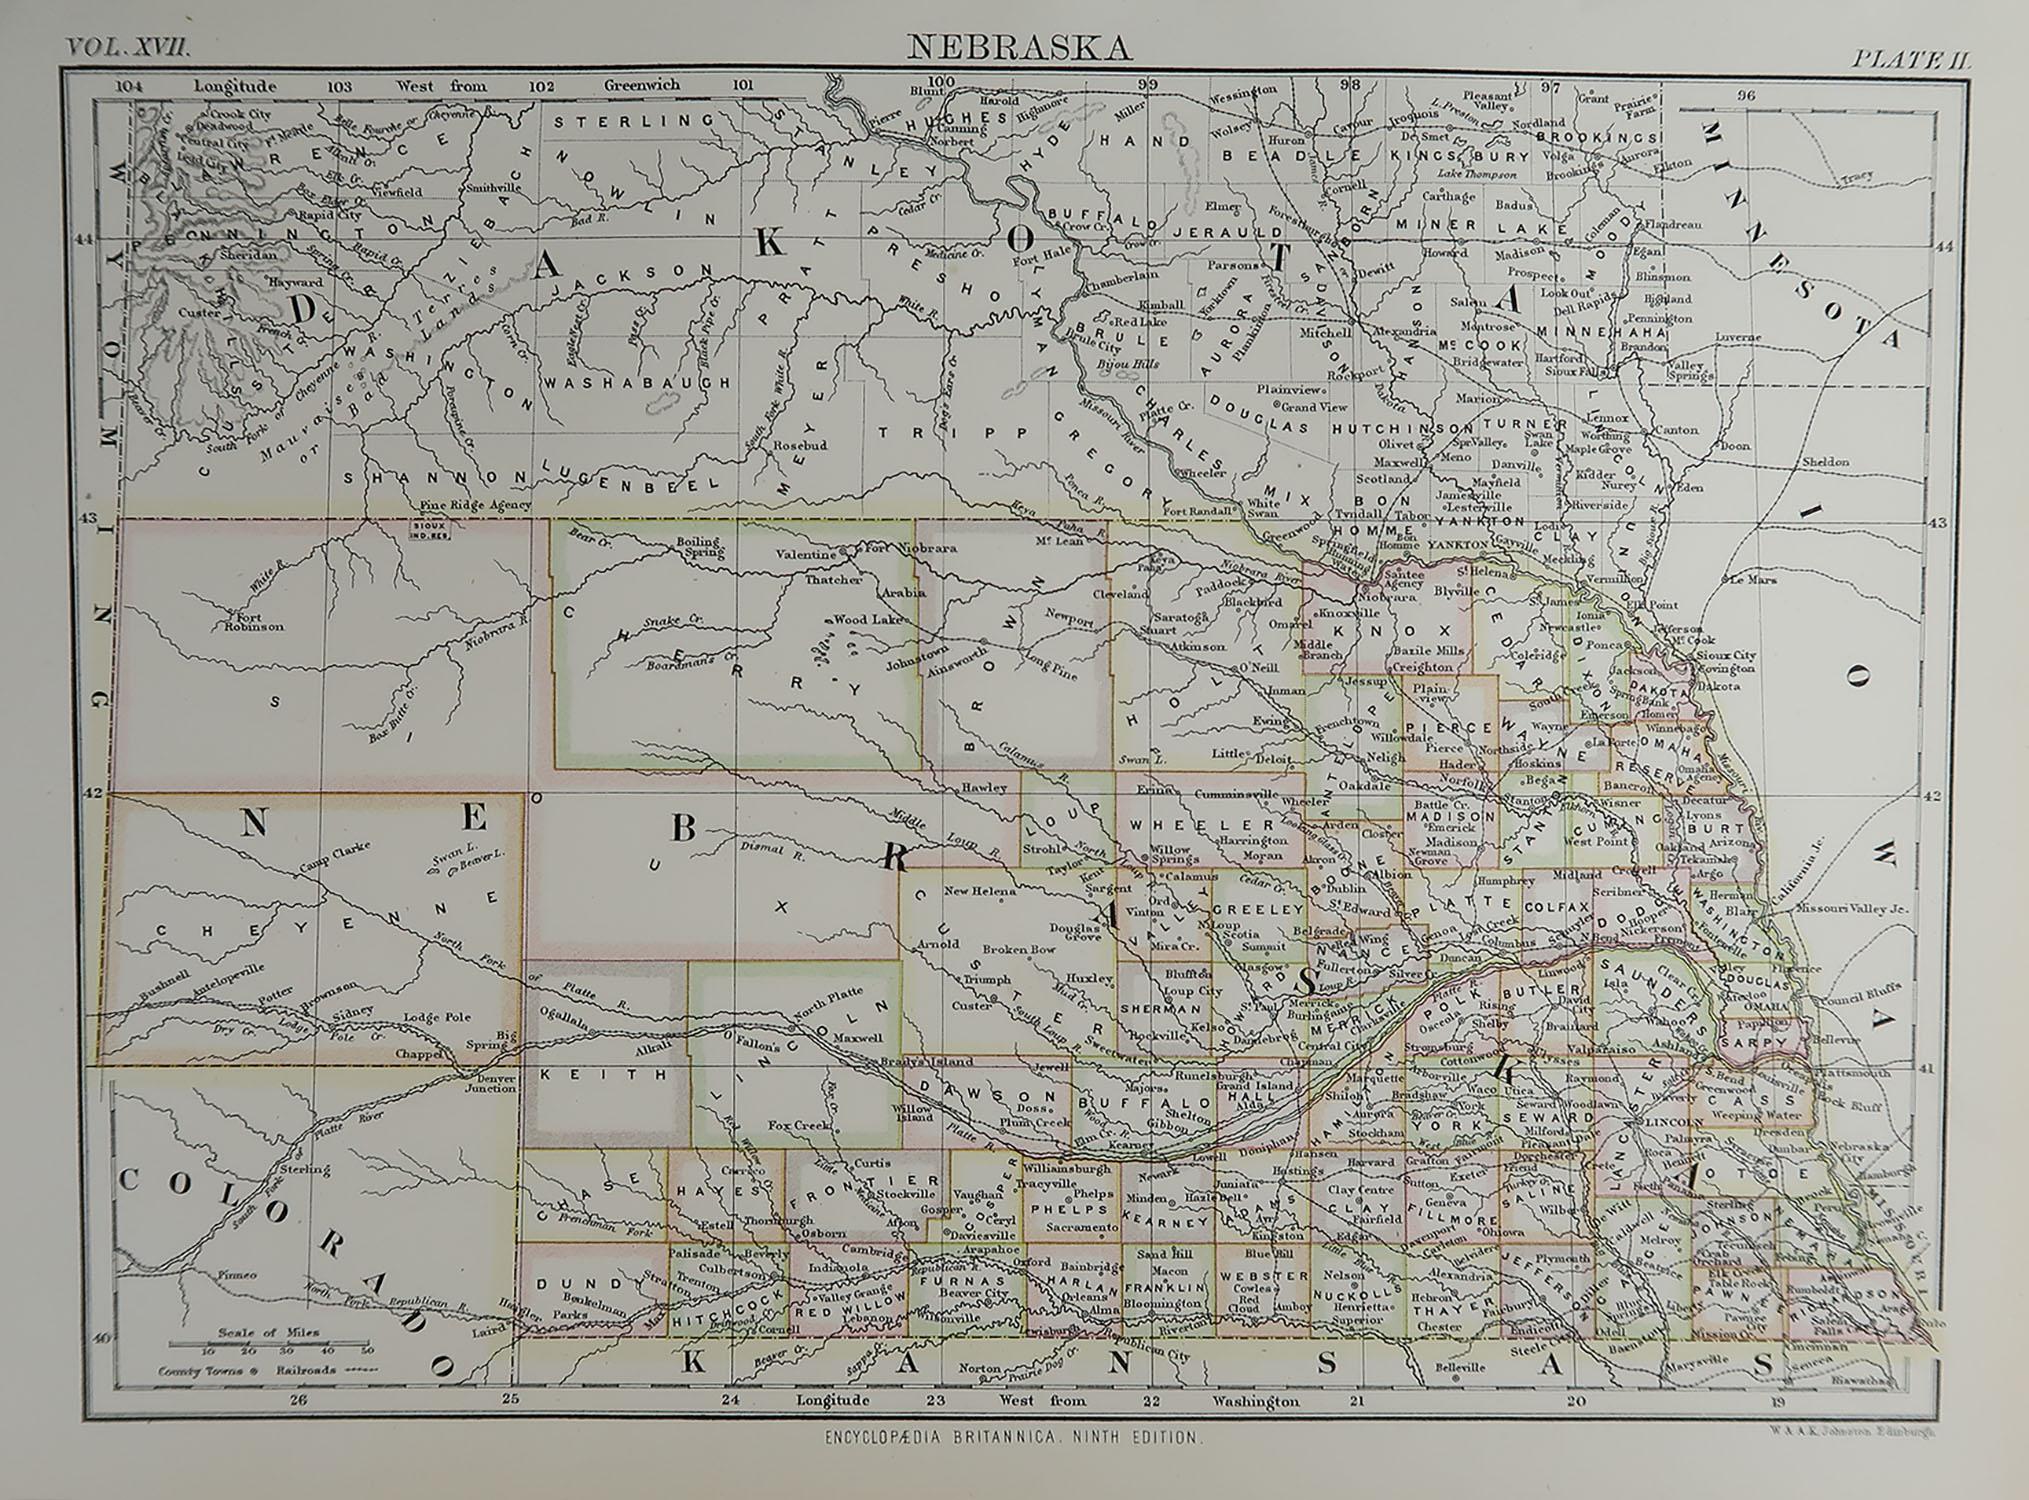 Great map of Nebraska

Drawn and Engraved by W. & A.K. Johnston

Published By A & C Black, Edinburgh.

Original colour

Unframed.








